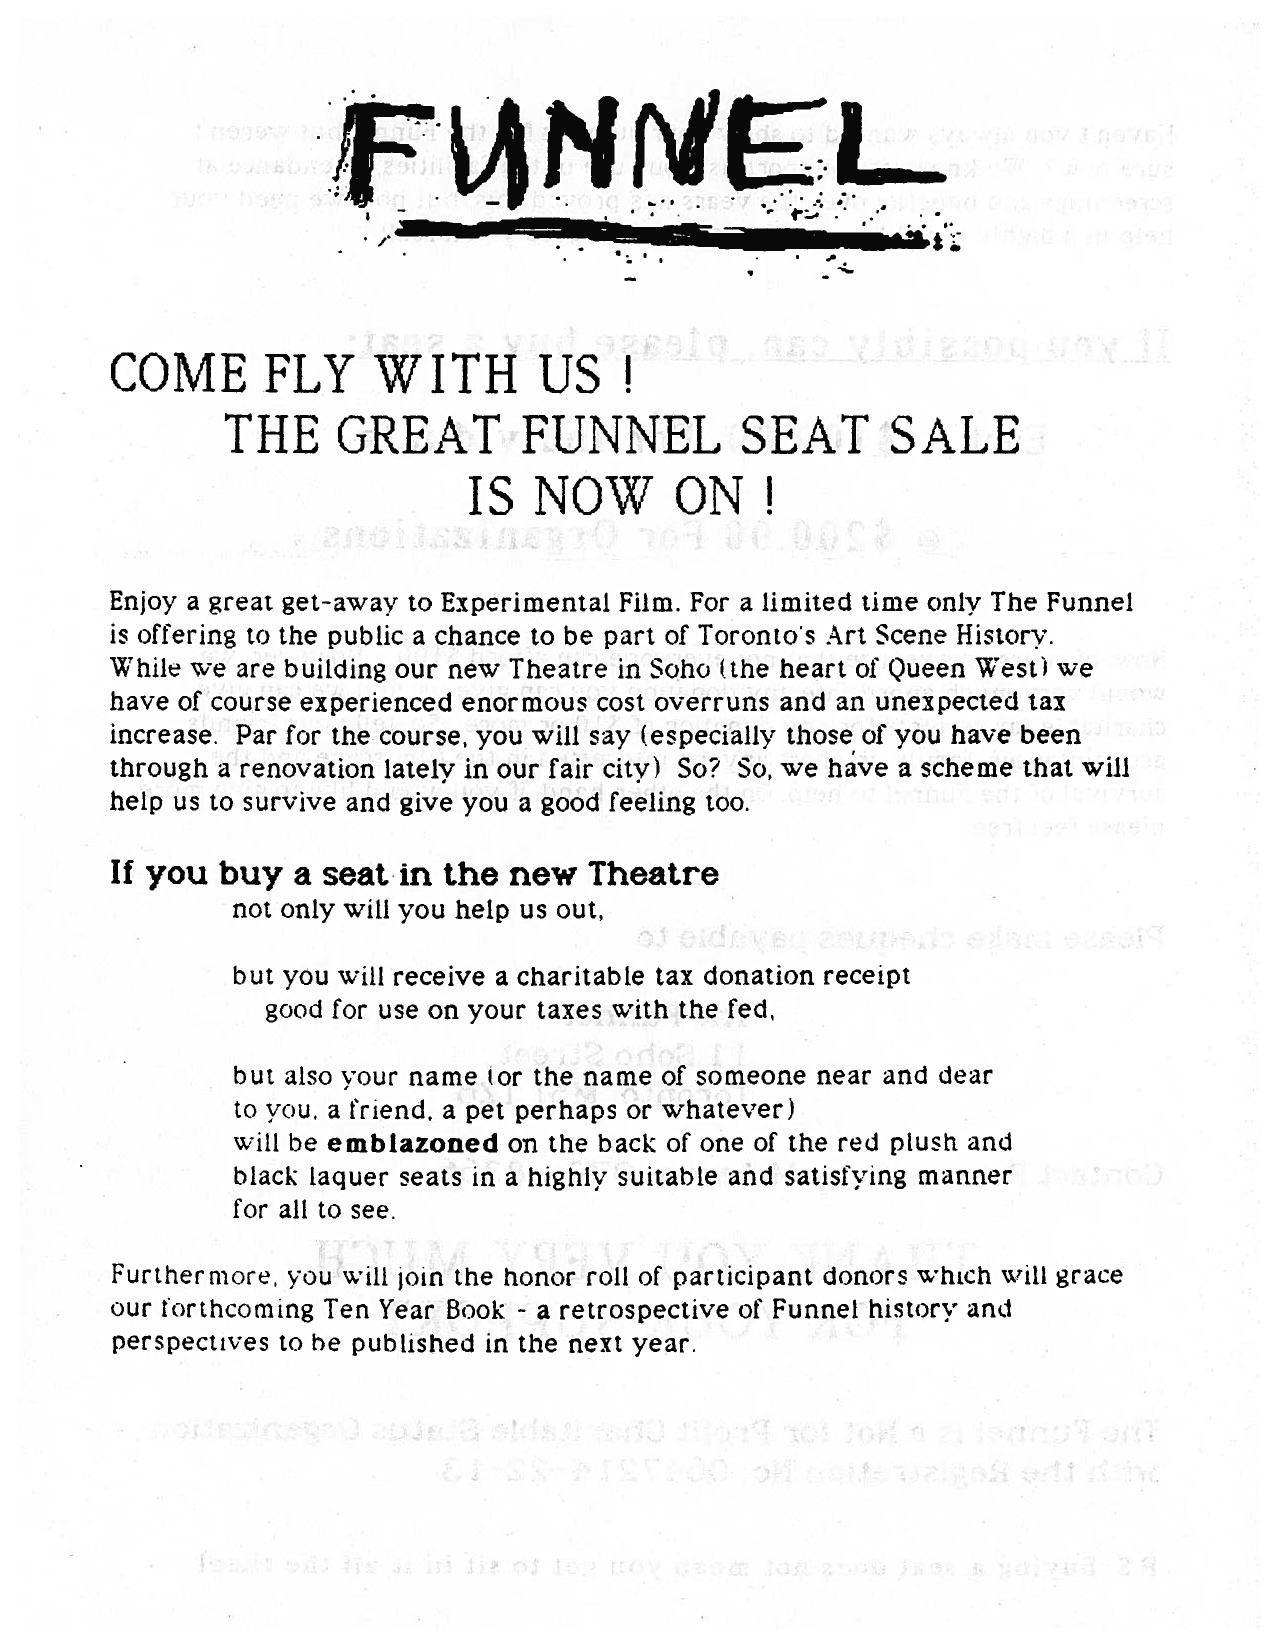 Seat Sale 1989a